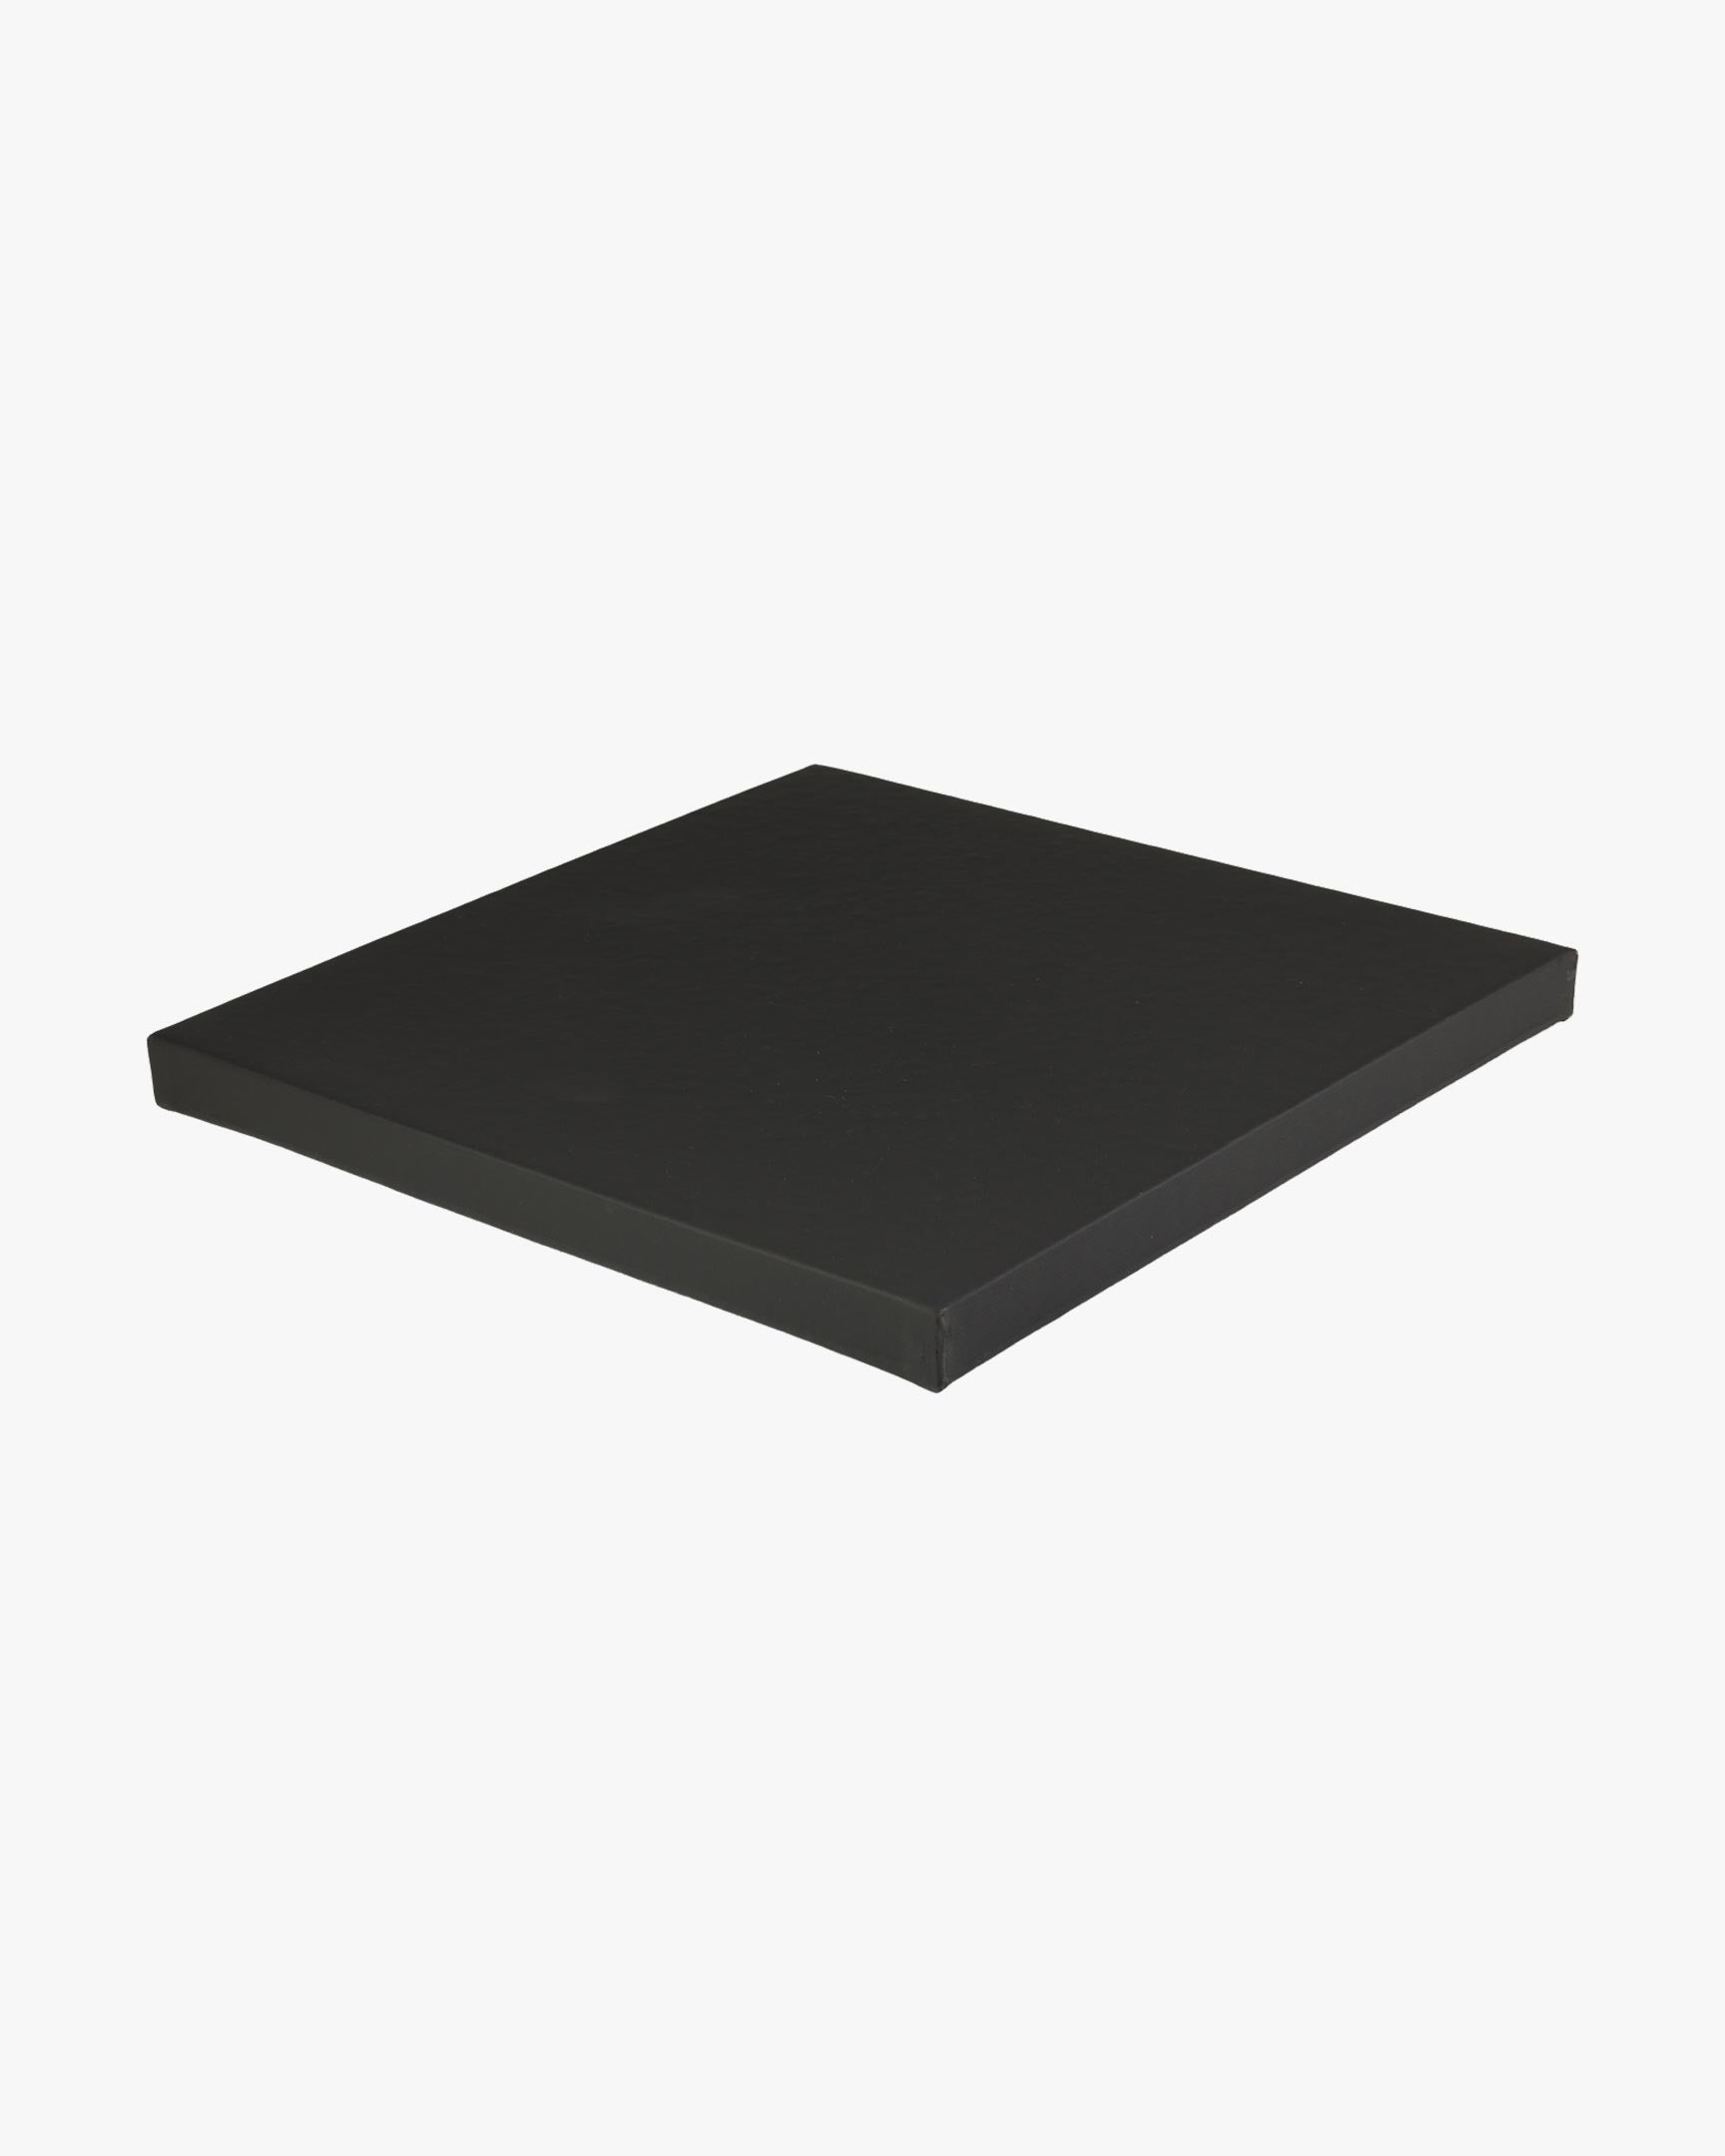 Smooth Tile Mat 1m x 1m x 1.5" Black